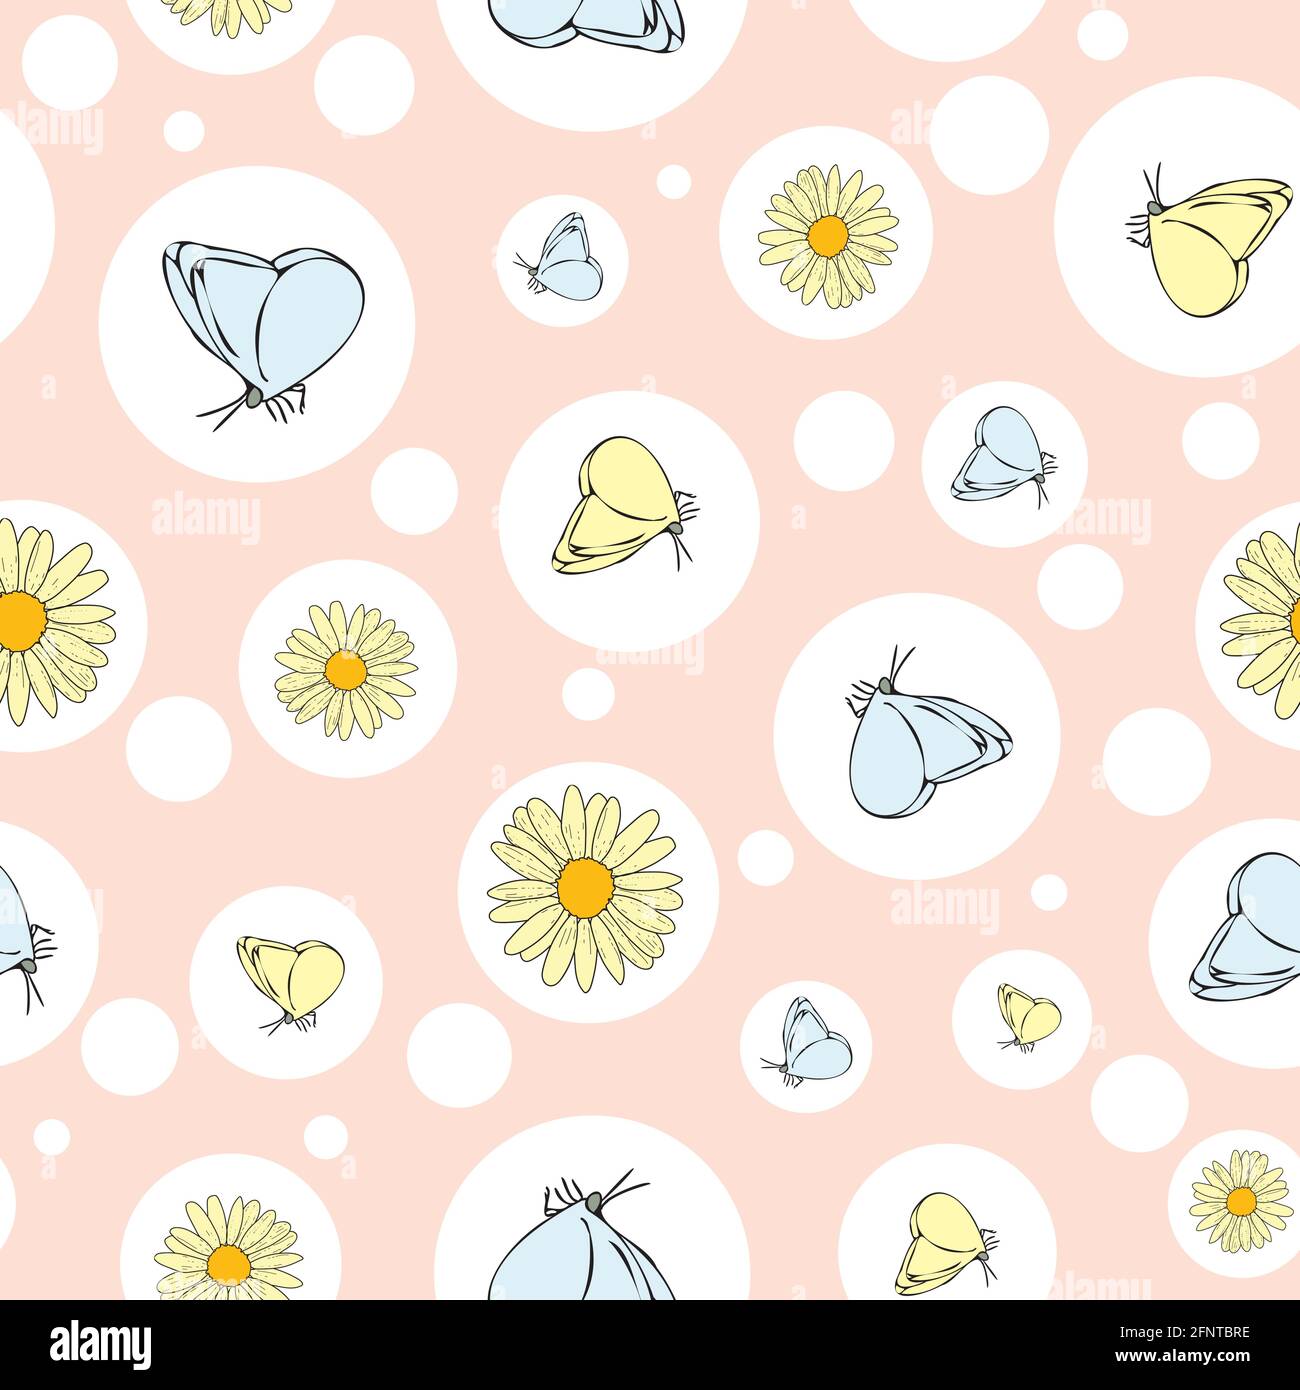 Seamless Peach Daisy Design Stock Illustration - Illustration of